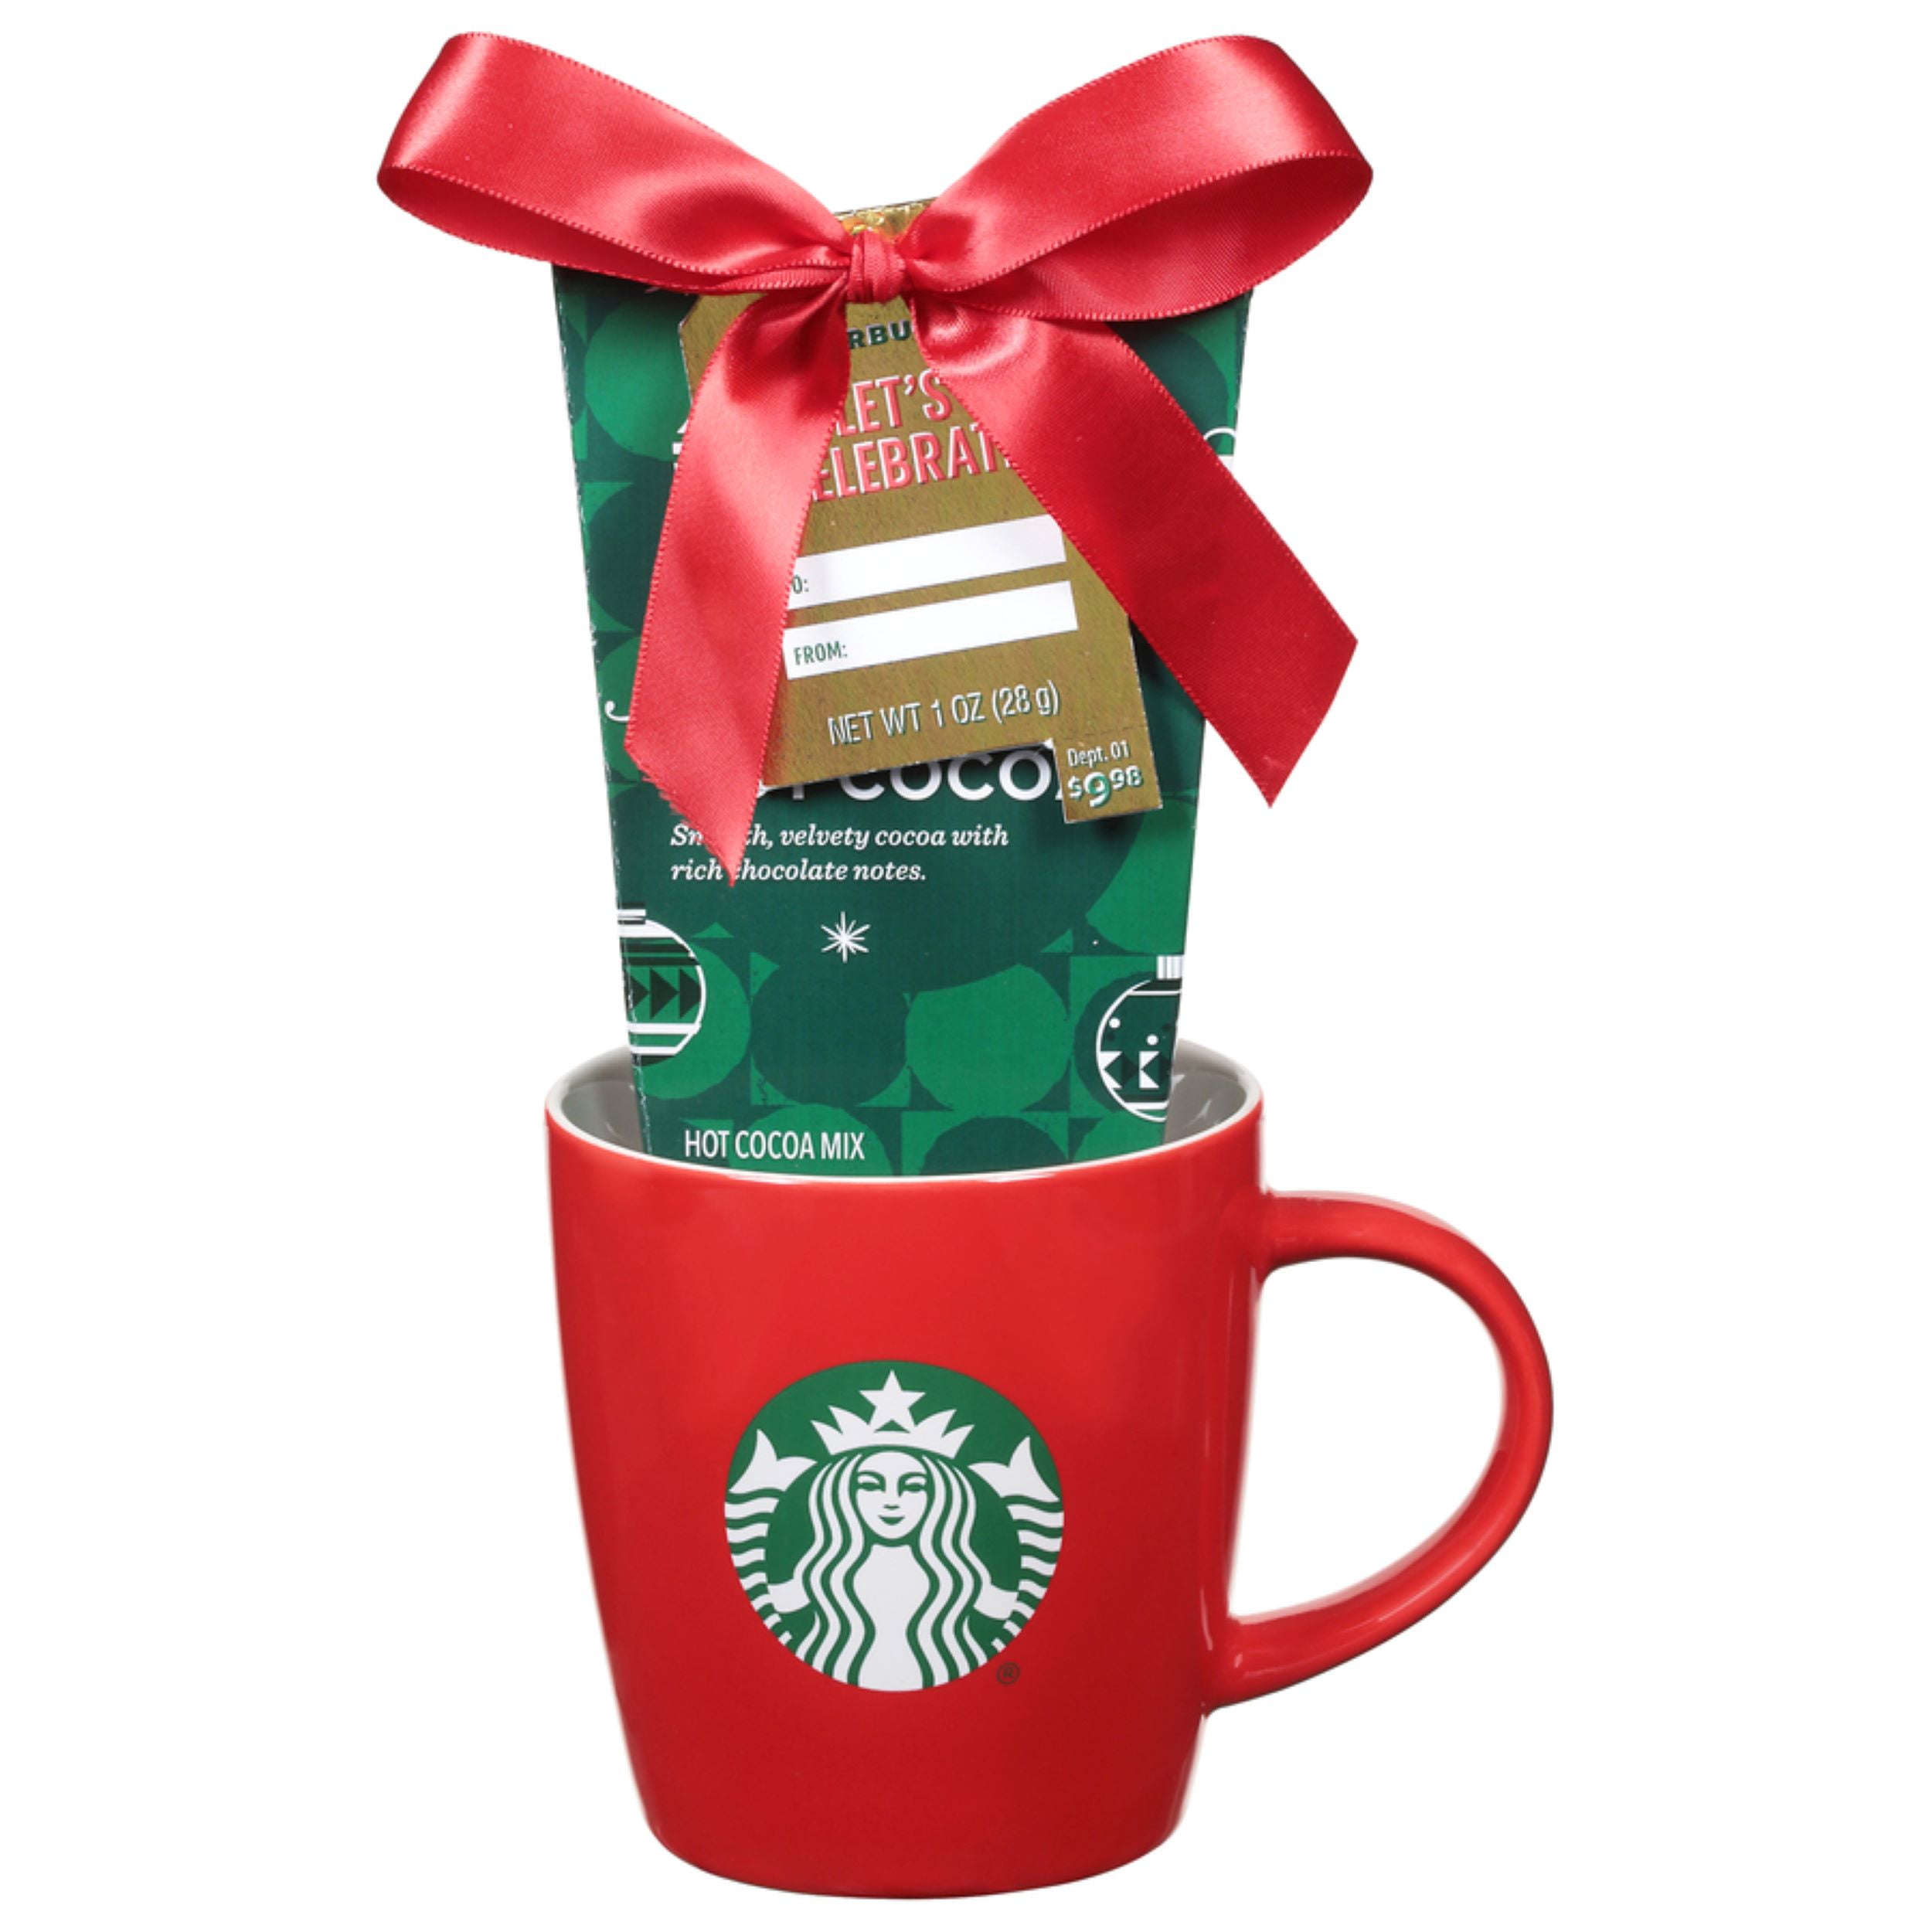 Starbucks Ceramic mug and Starbucks Hot Cocoa Gift Pack